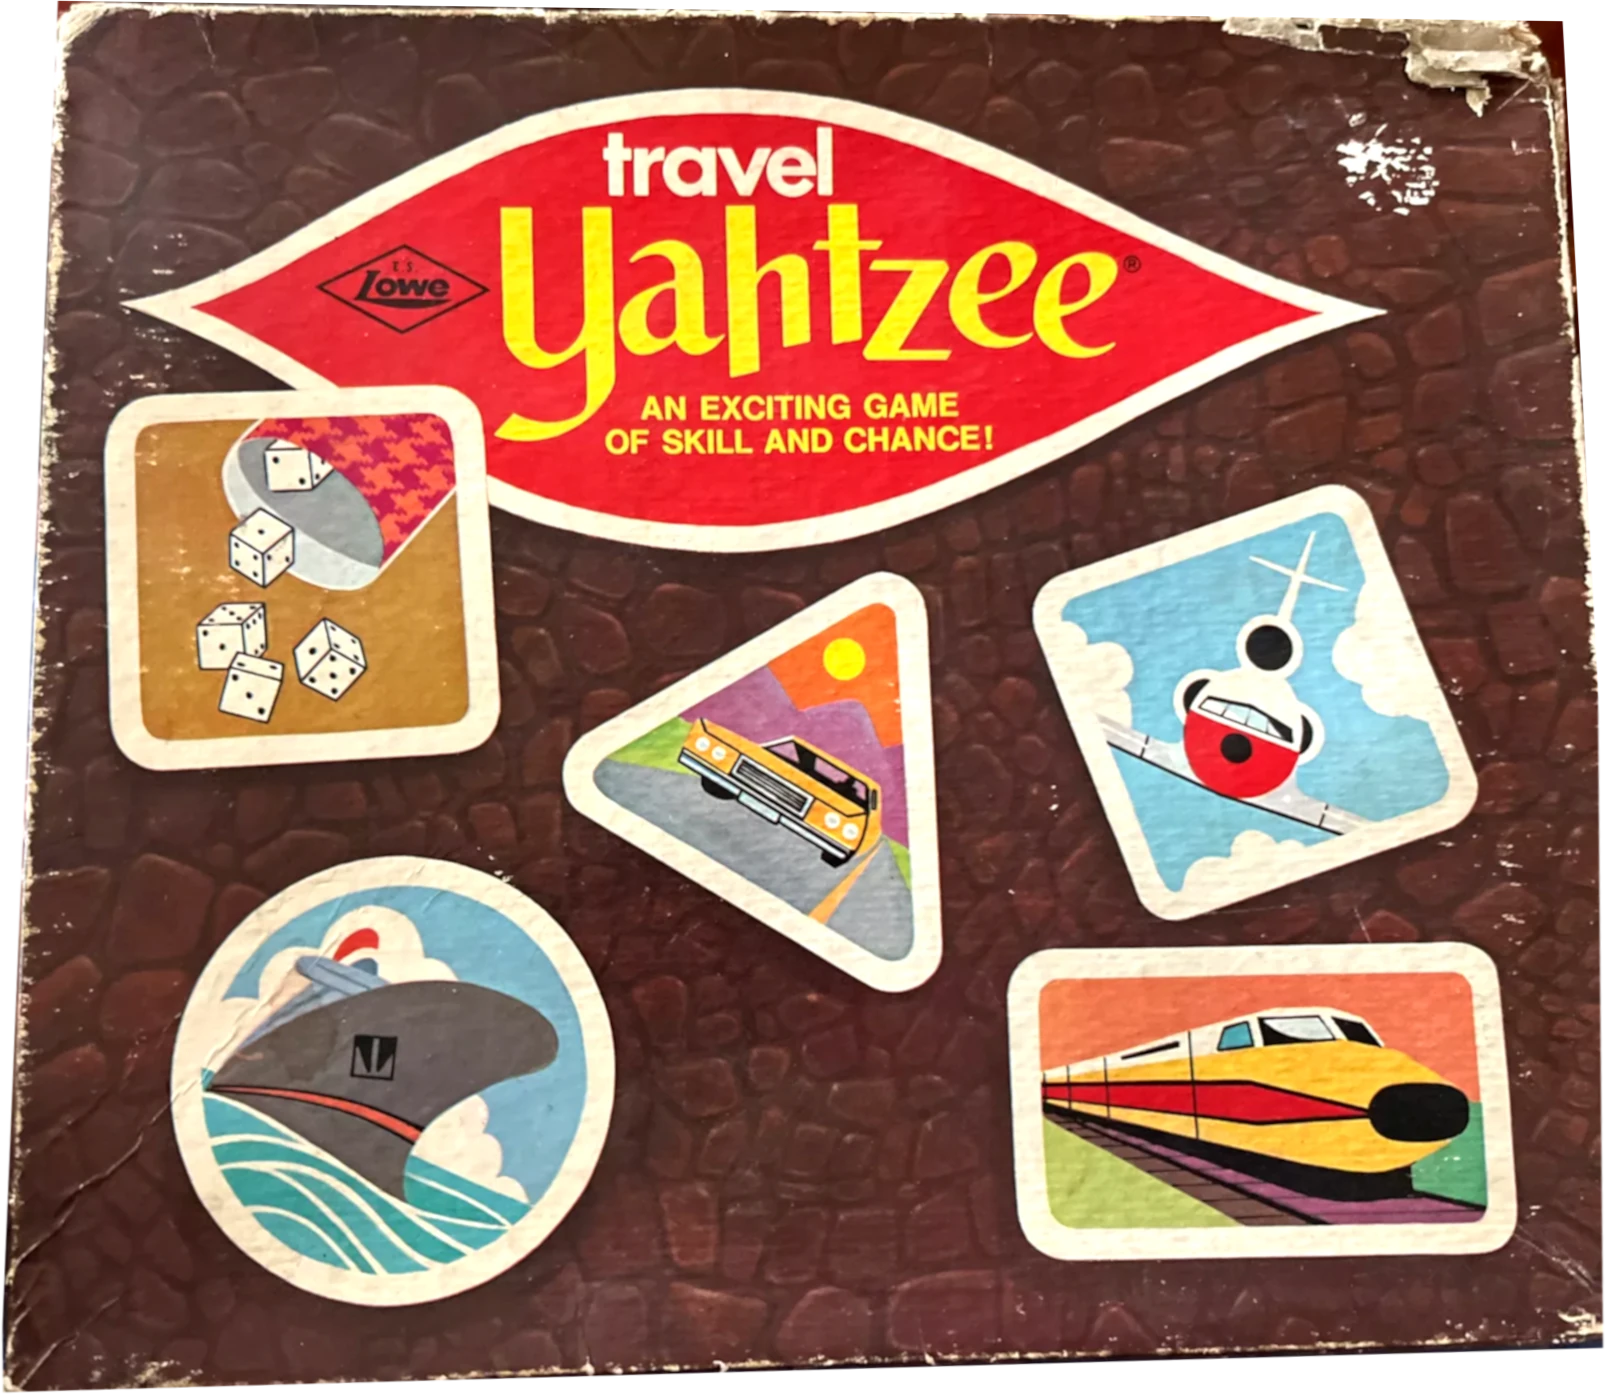 1970 Travel Yahtzee Box